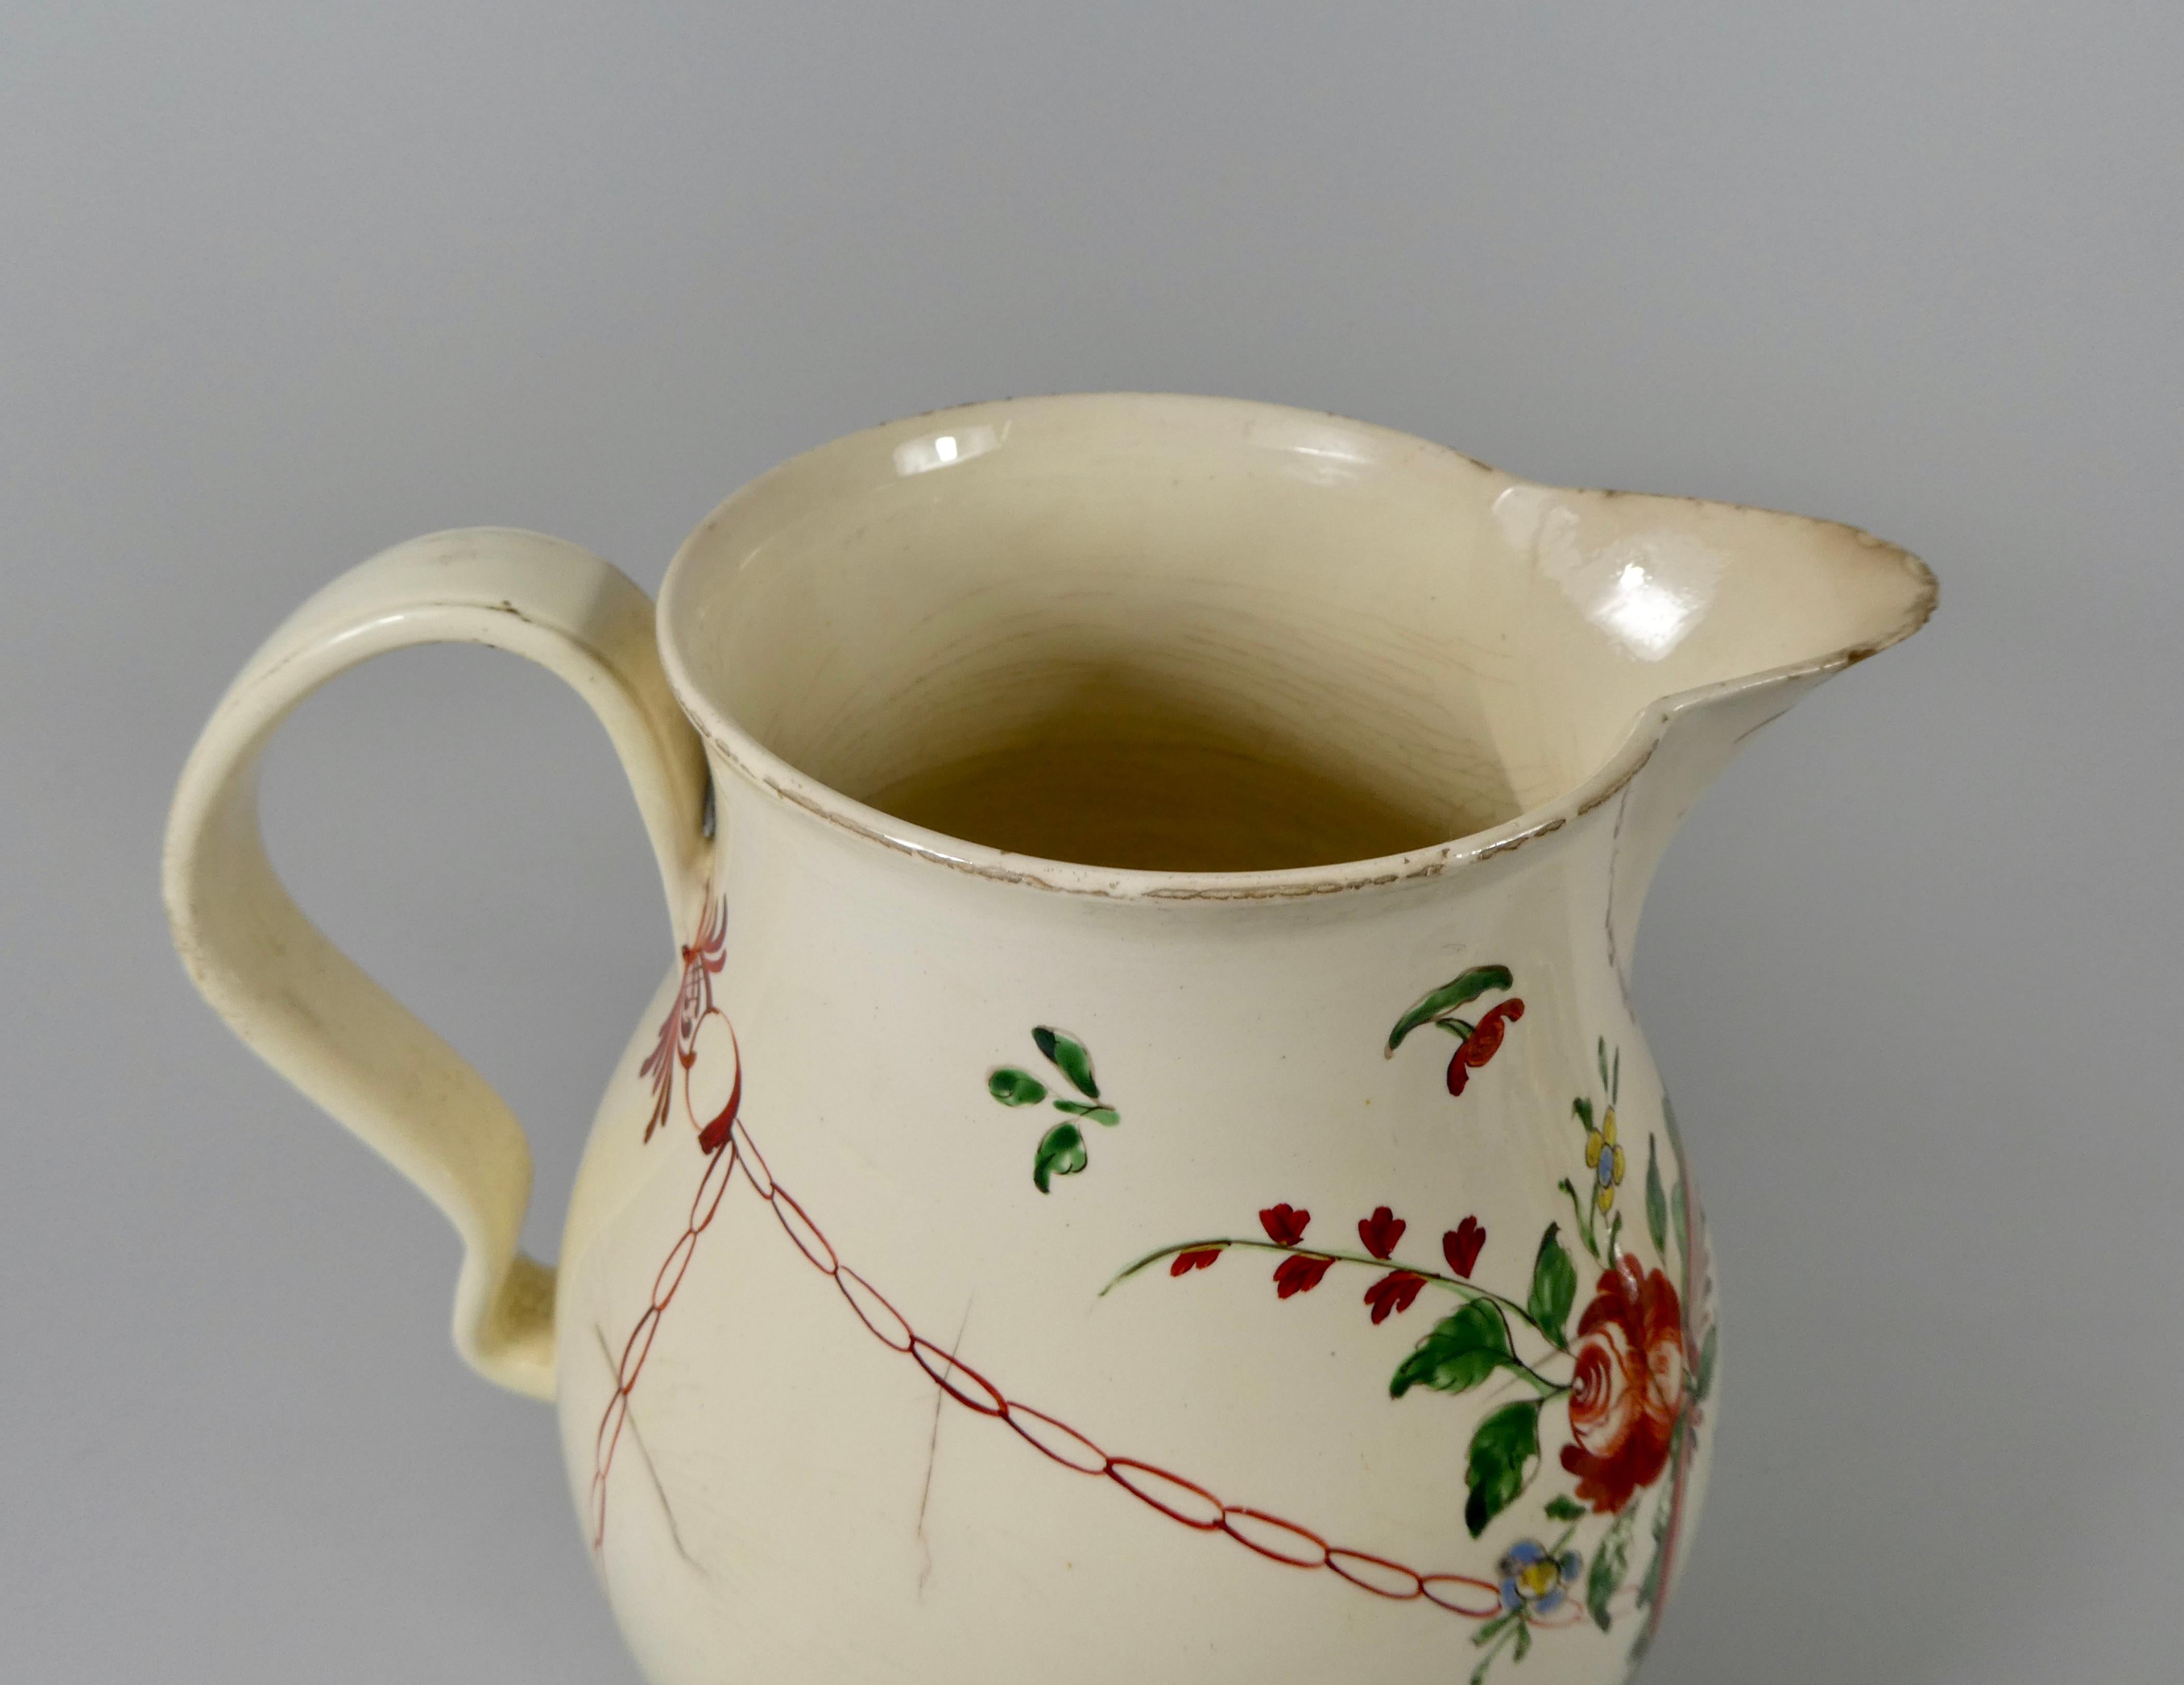 Creamware Leeds creamware jug, John Pickford, 1773.